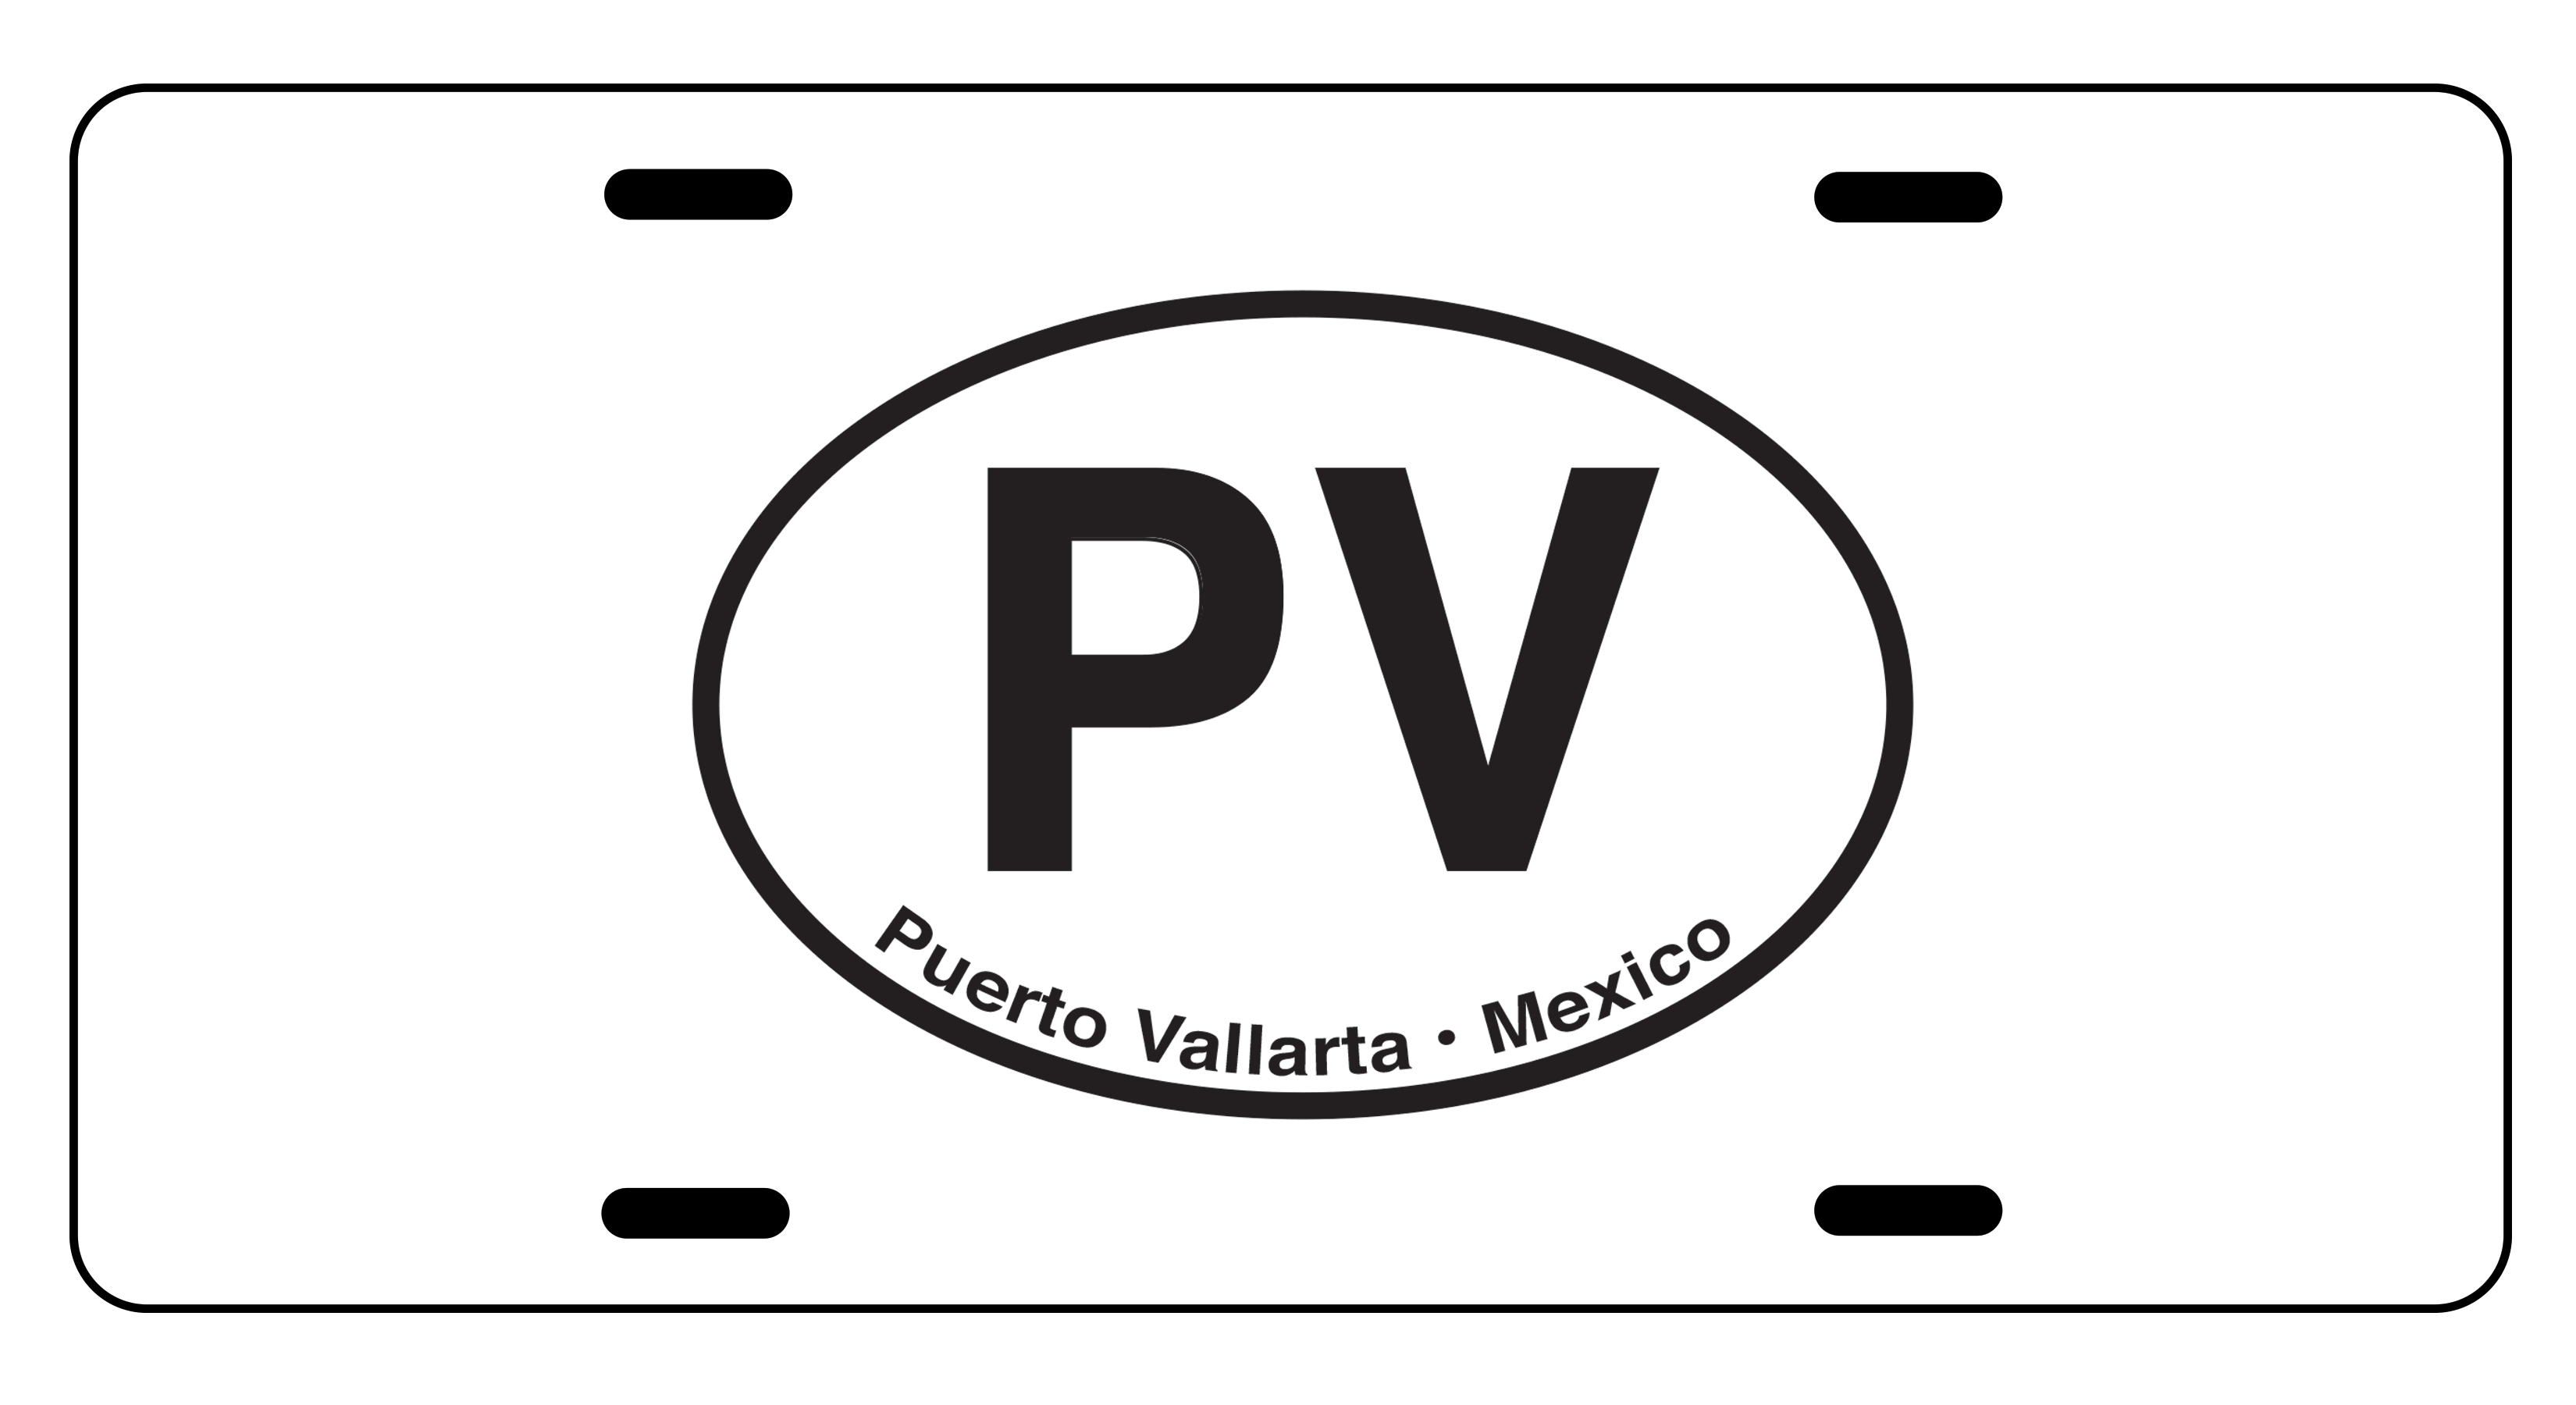 Puerto Vallarta License Plates - My Destination Location